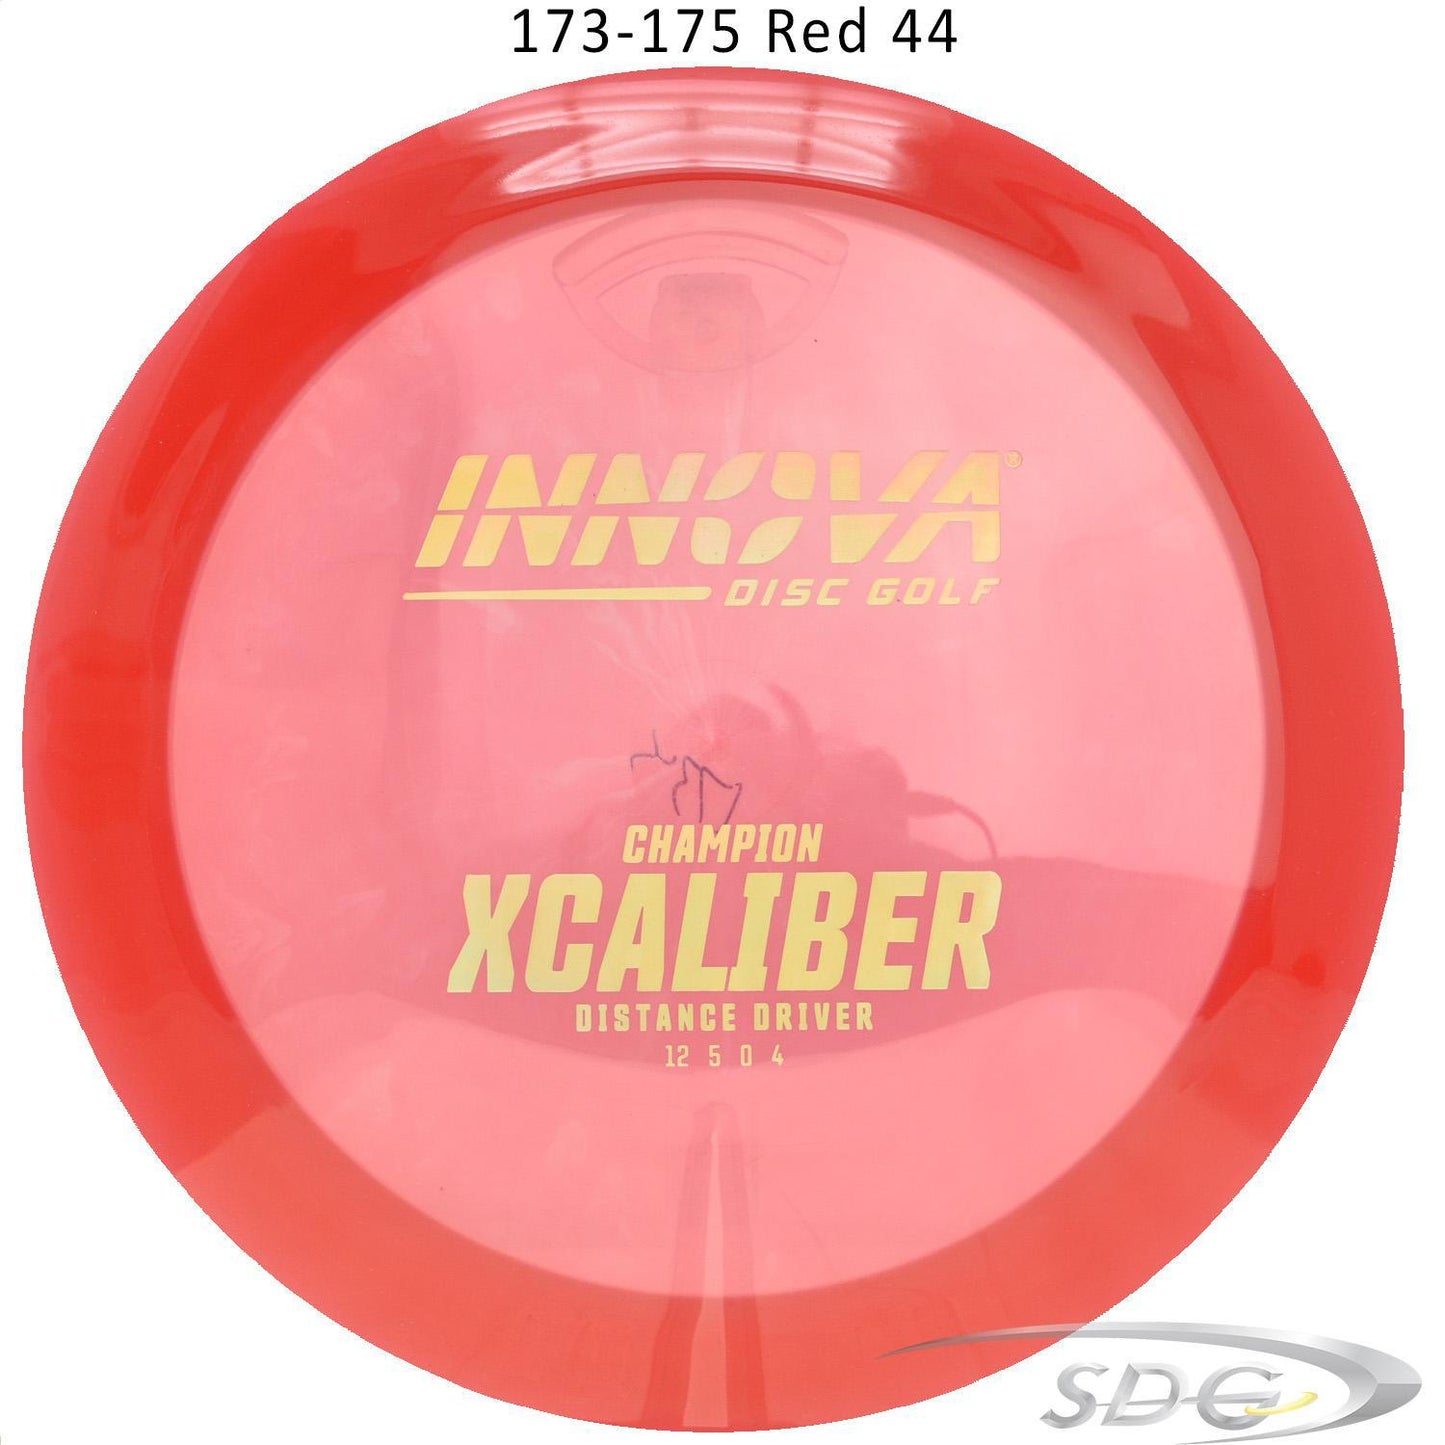 innova-champion-xcaliber-disc-golf-distance-driver 173-175 Red 44 